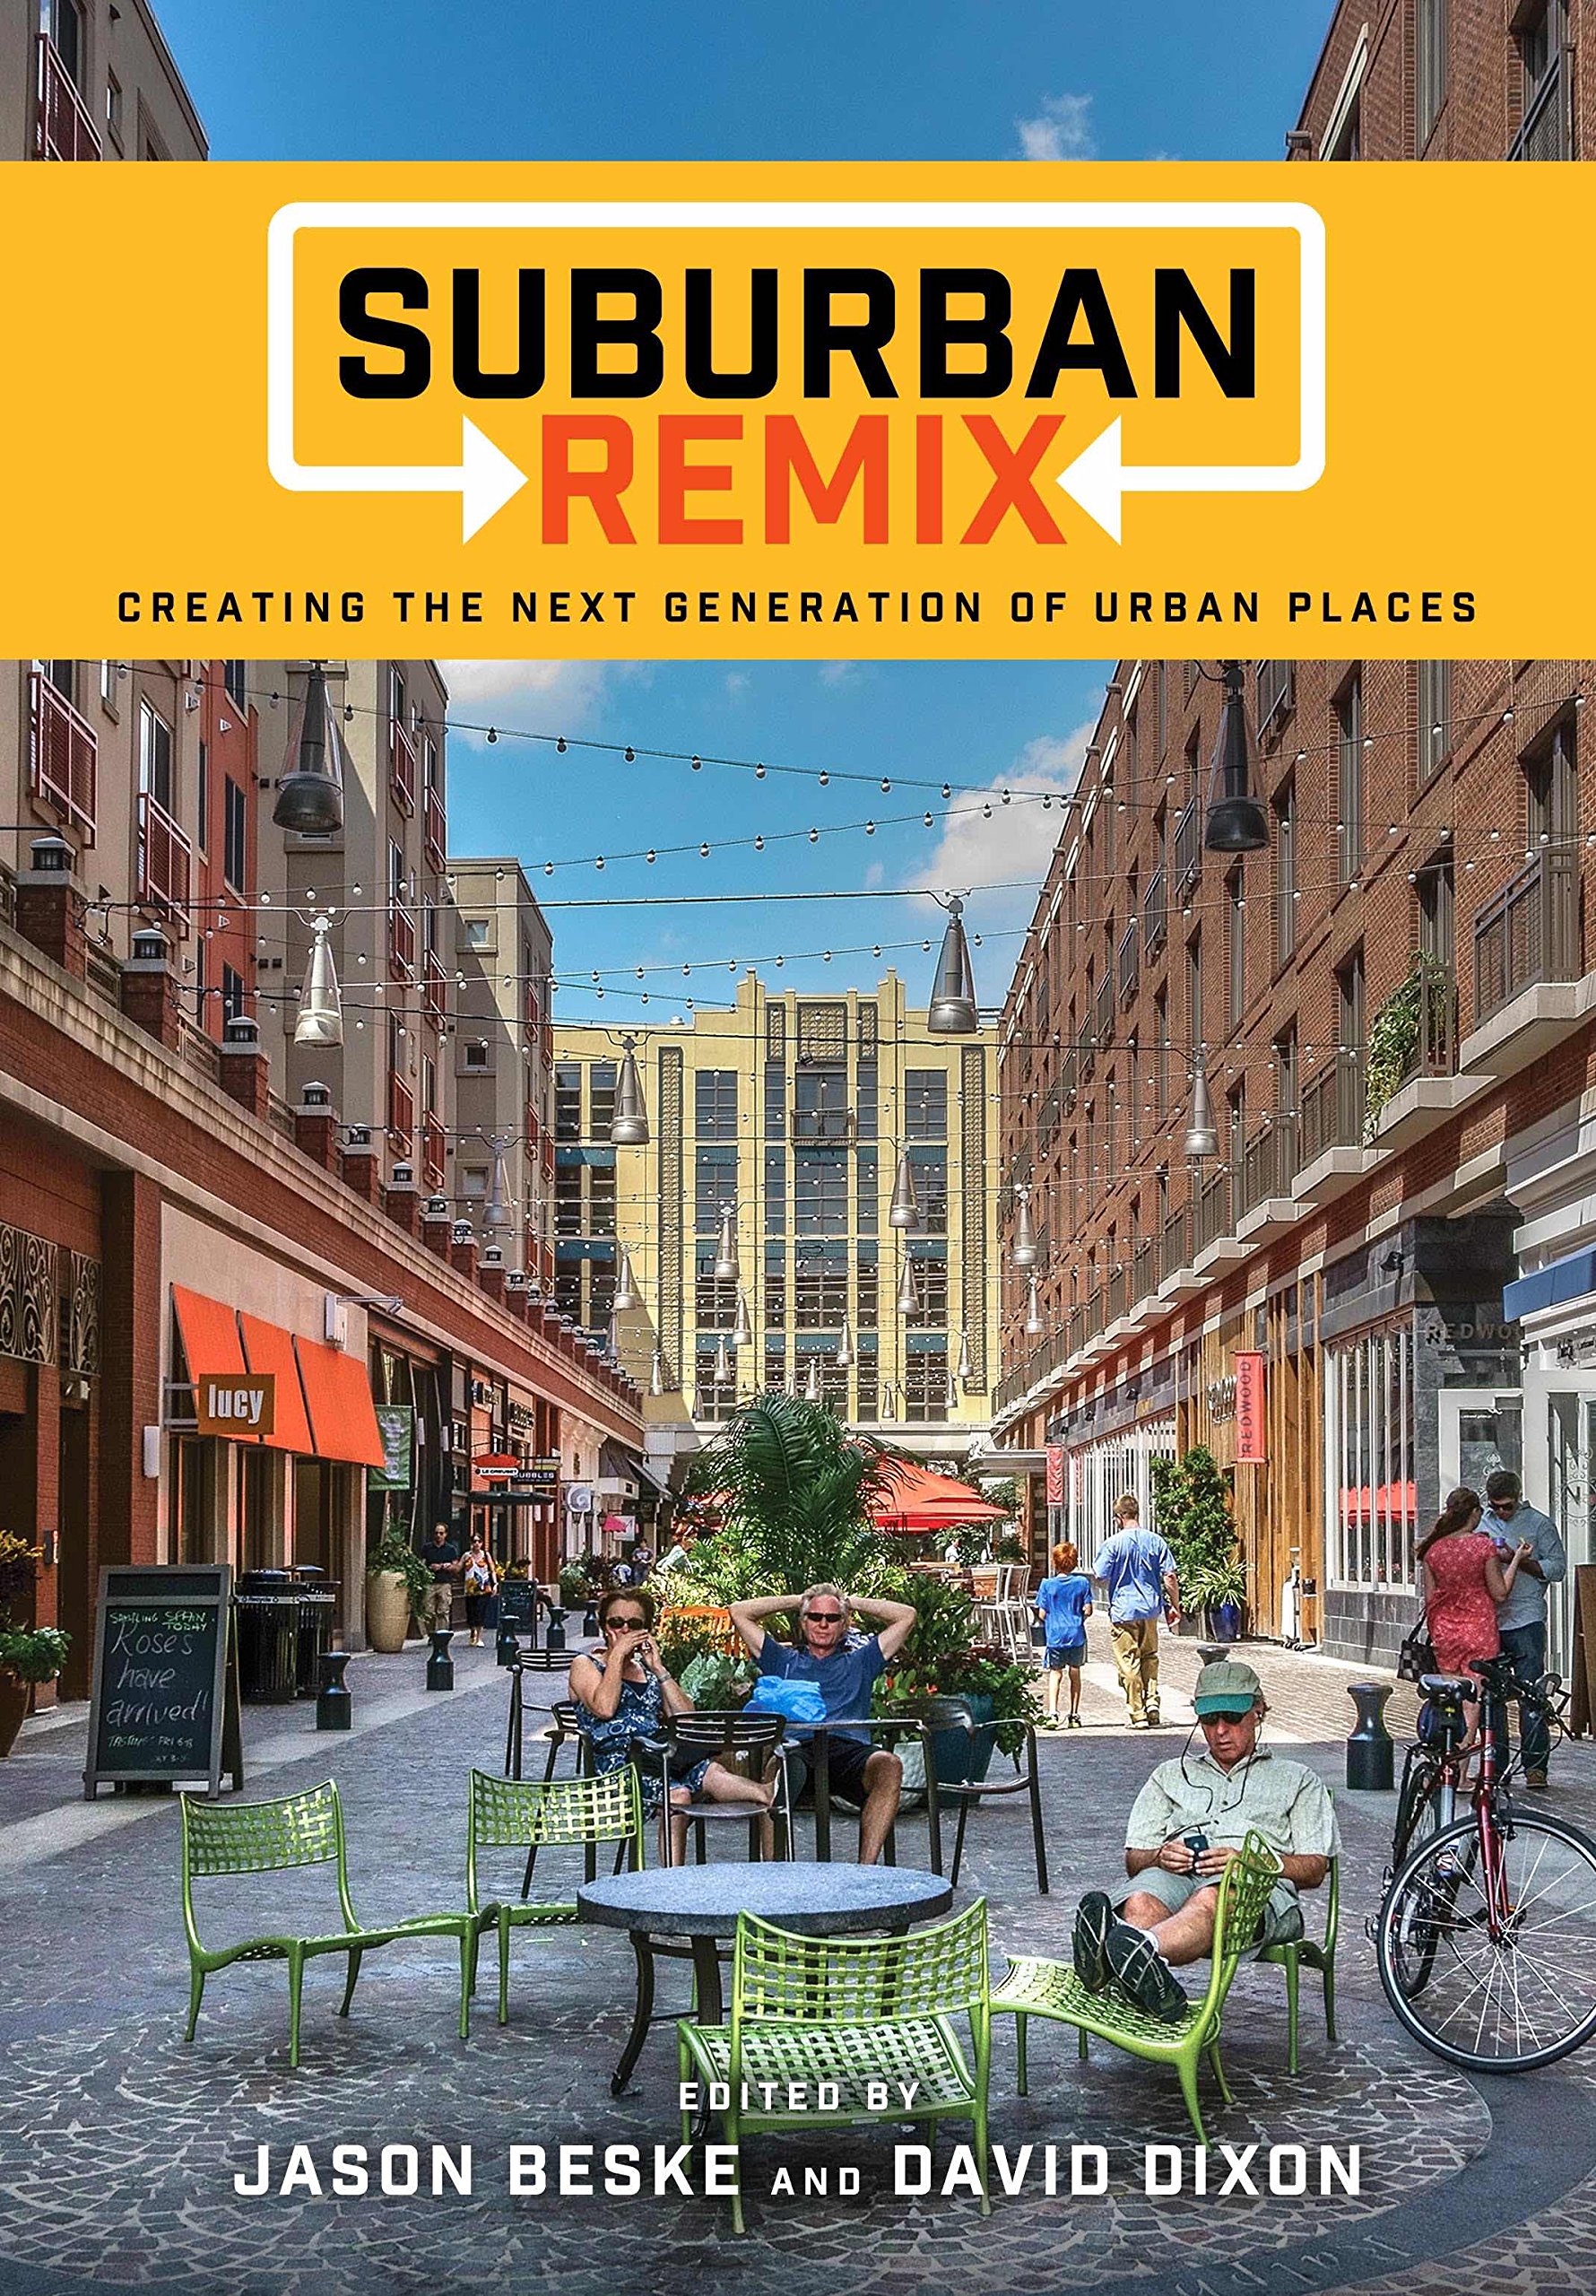 Suburban remix creating the next generation of urban places